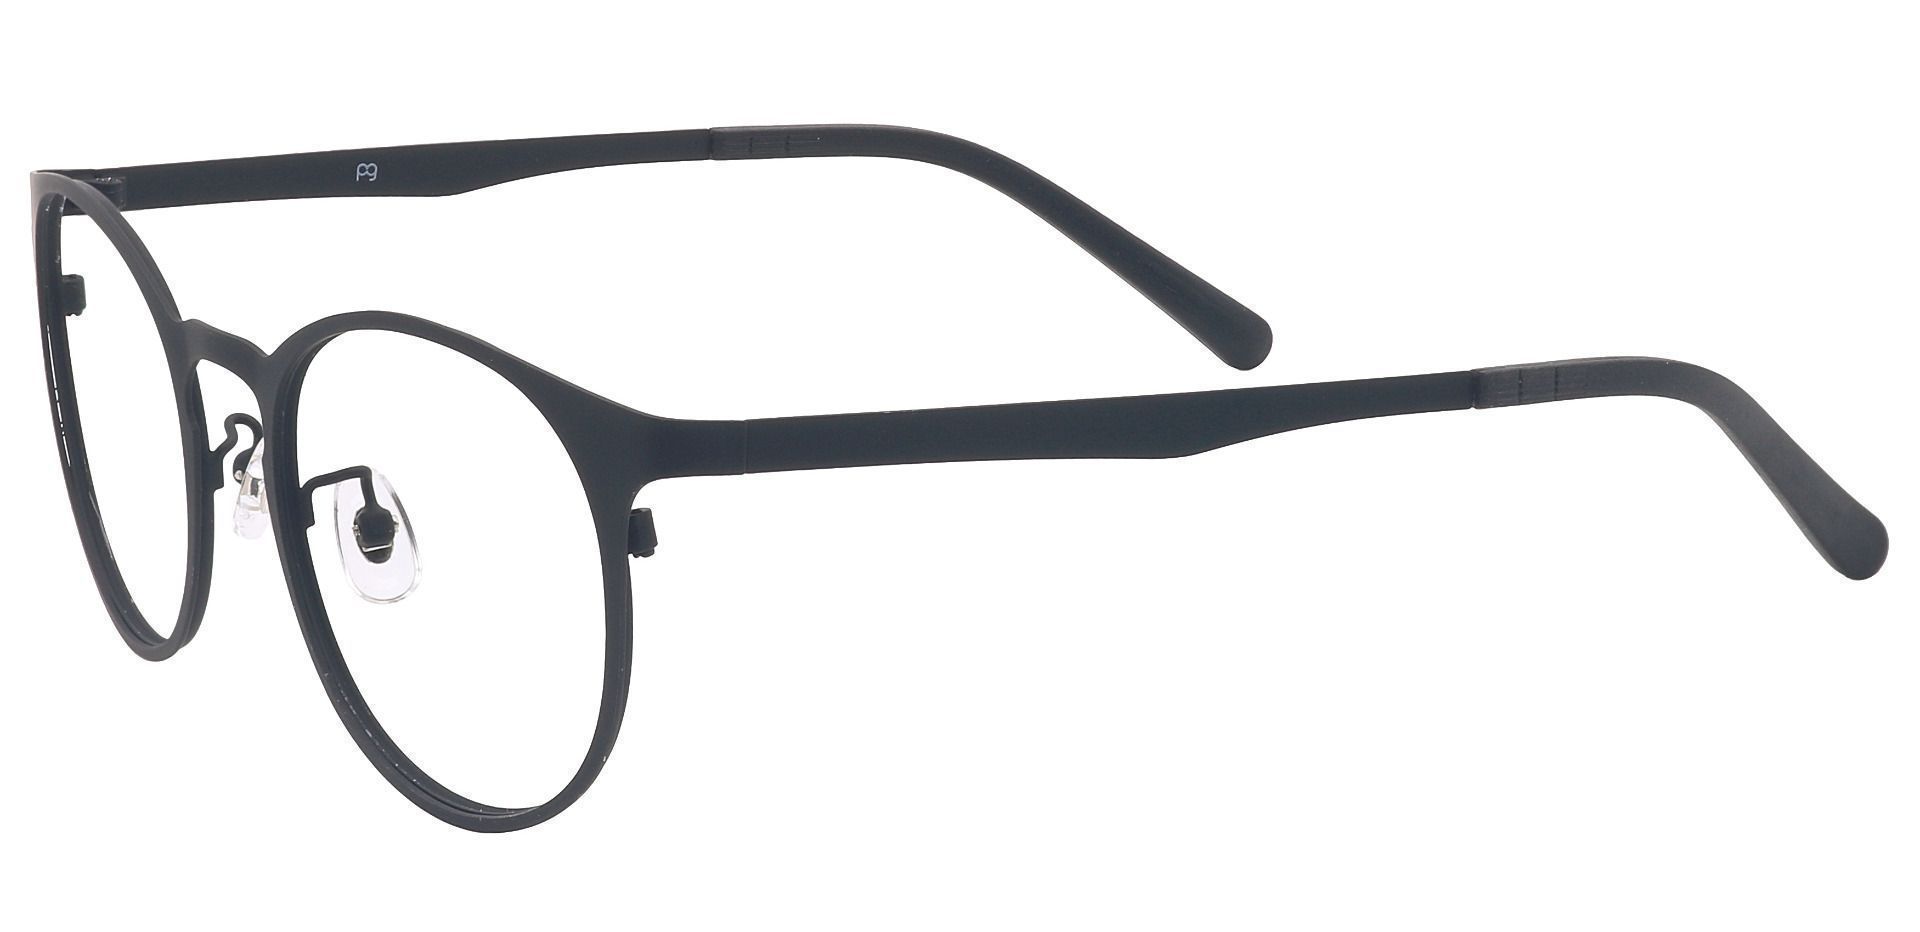 Wallace Oval Eyeglasses Frame - Black